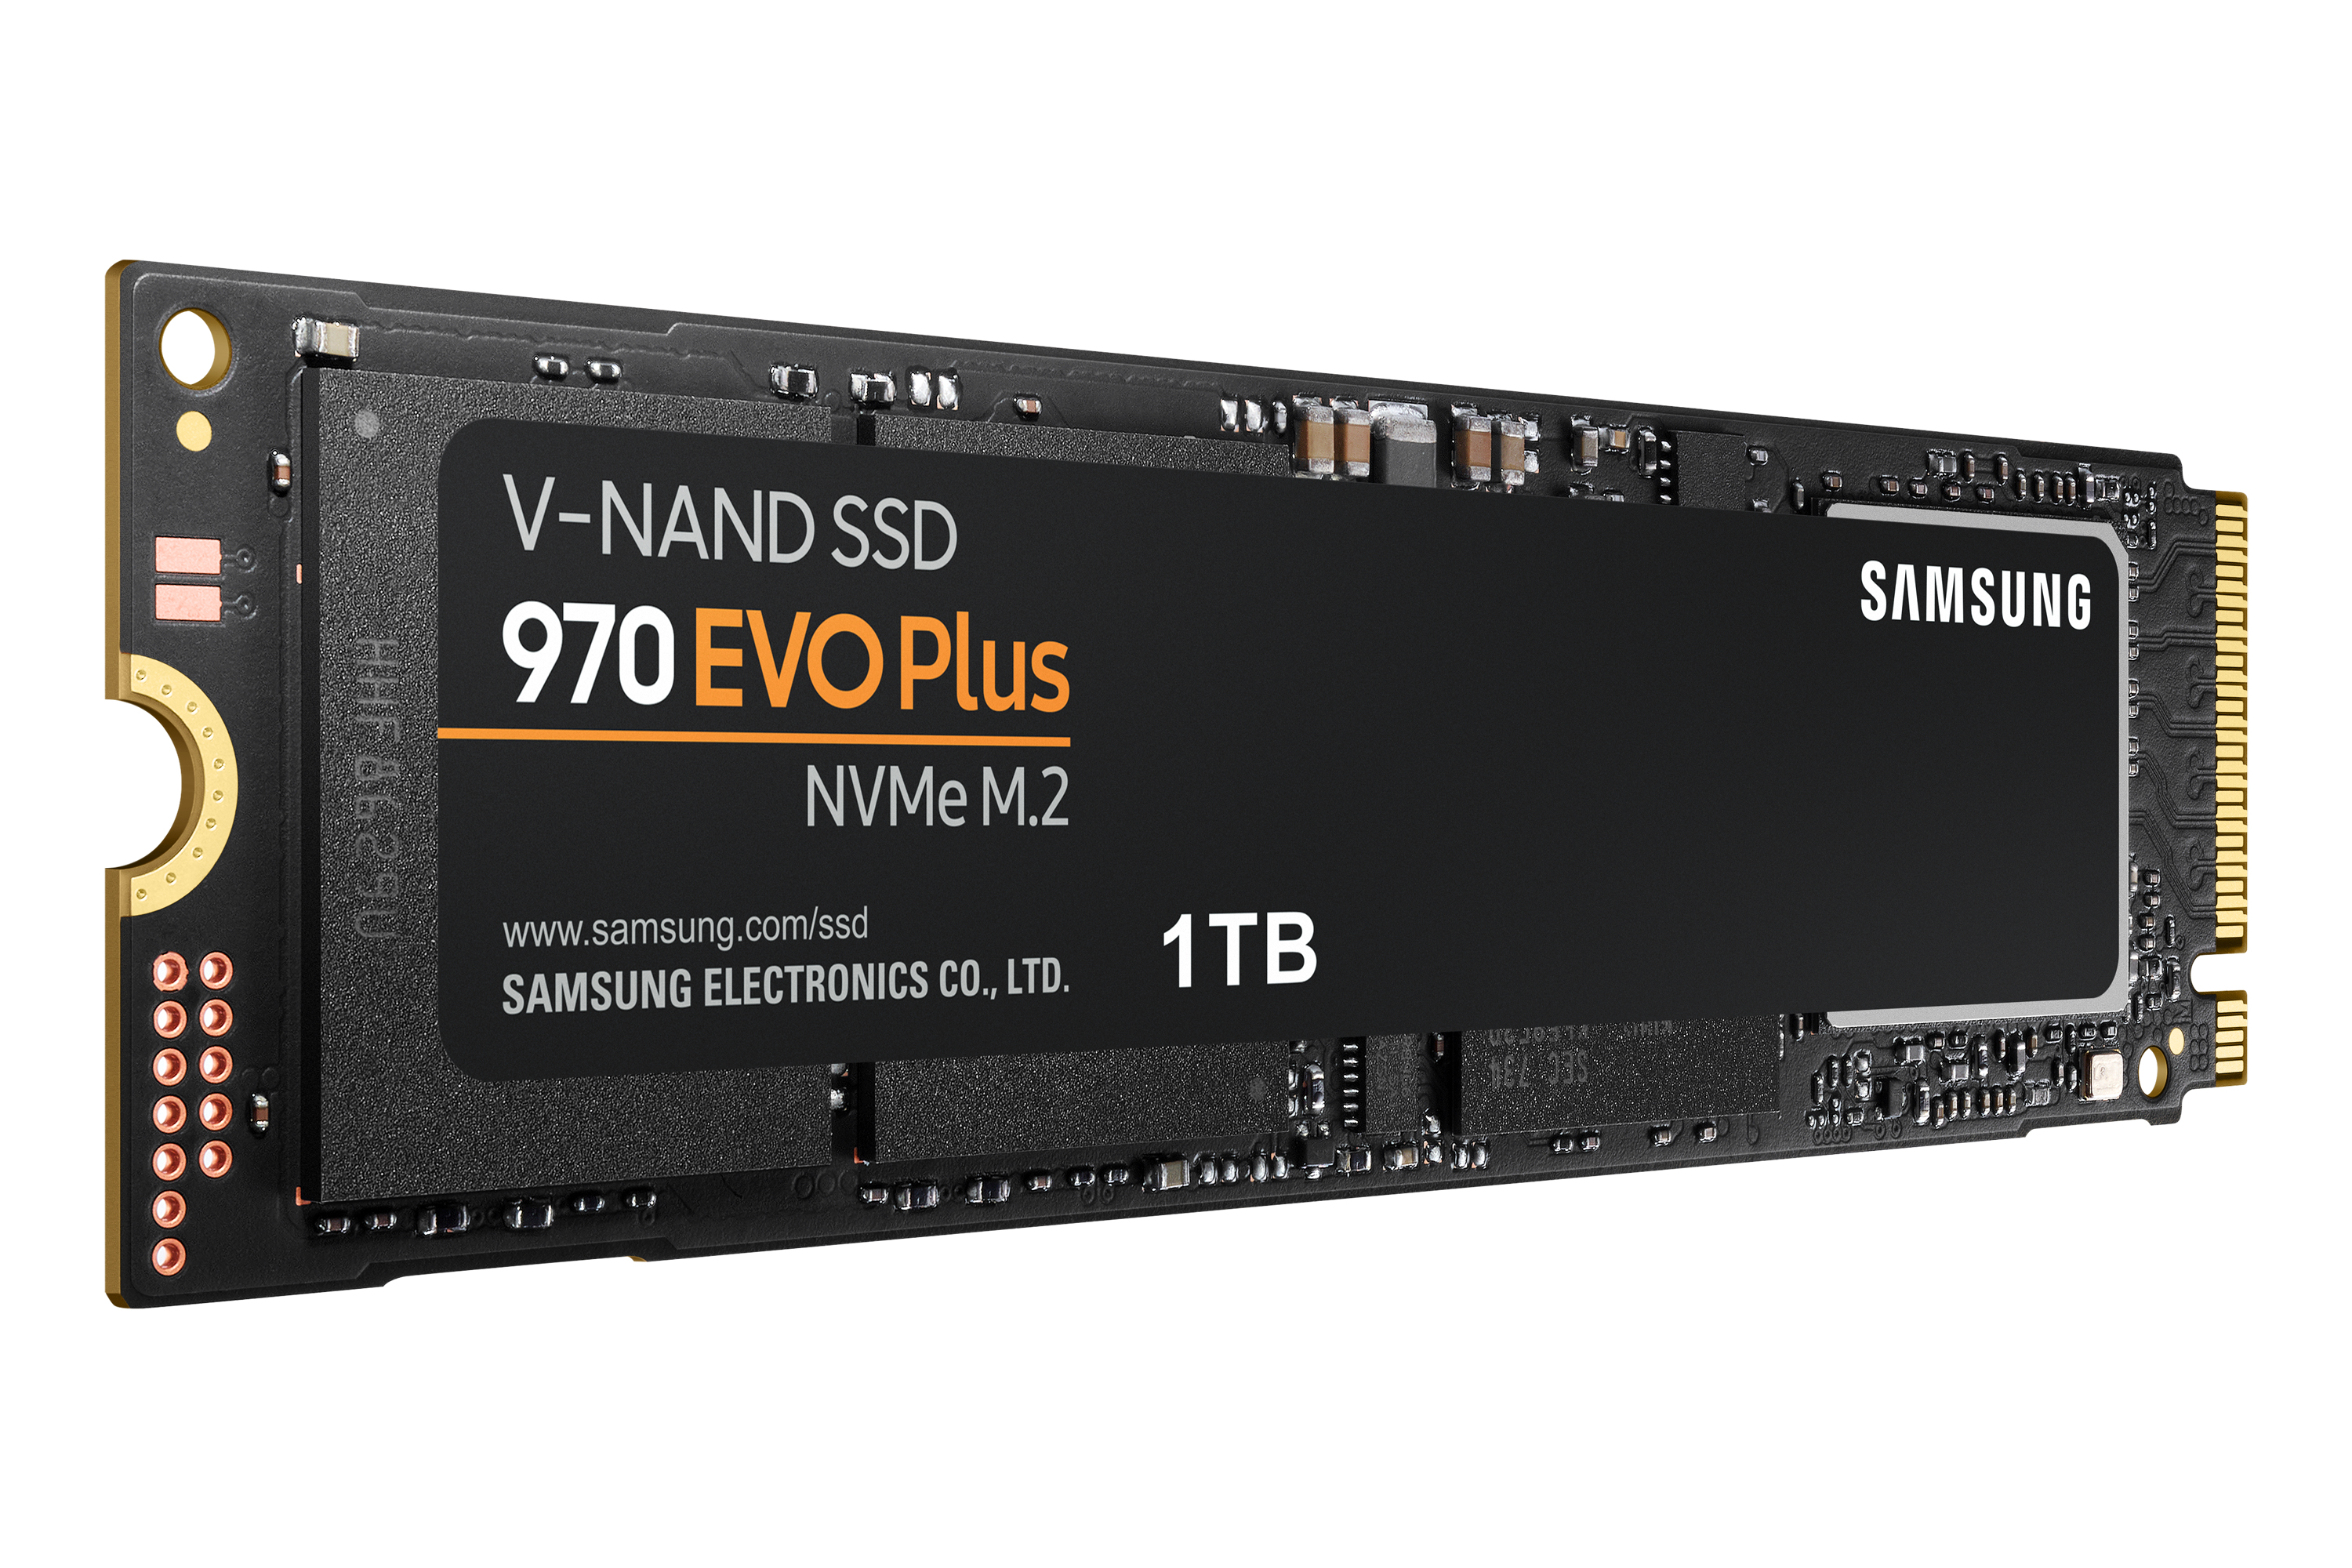 Samsung 970 EVO plus SSD M.2 1TB NVMe PCIe 3.0 x 4 1.3 Phoenix Controller retail